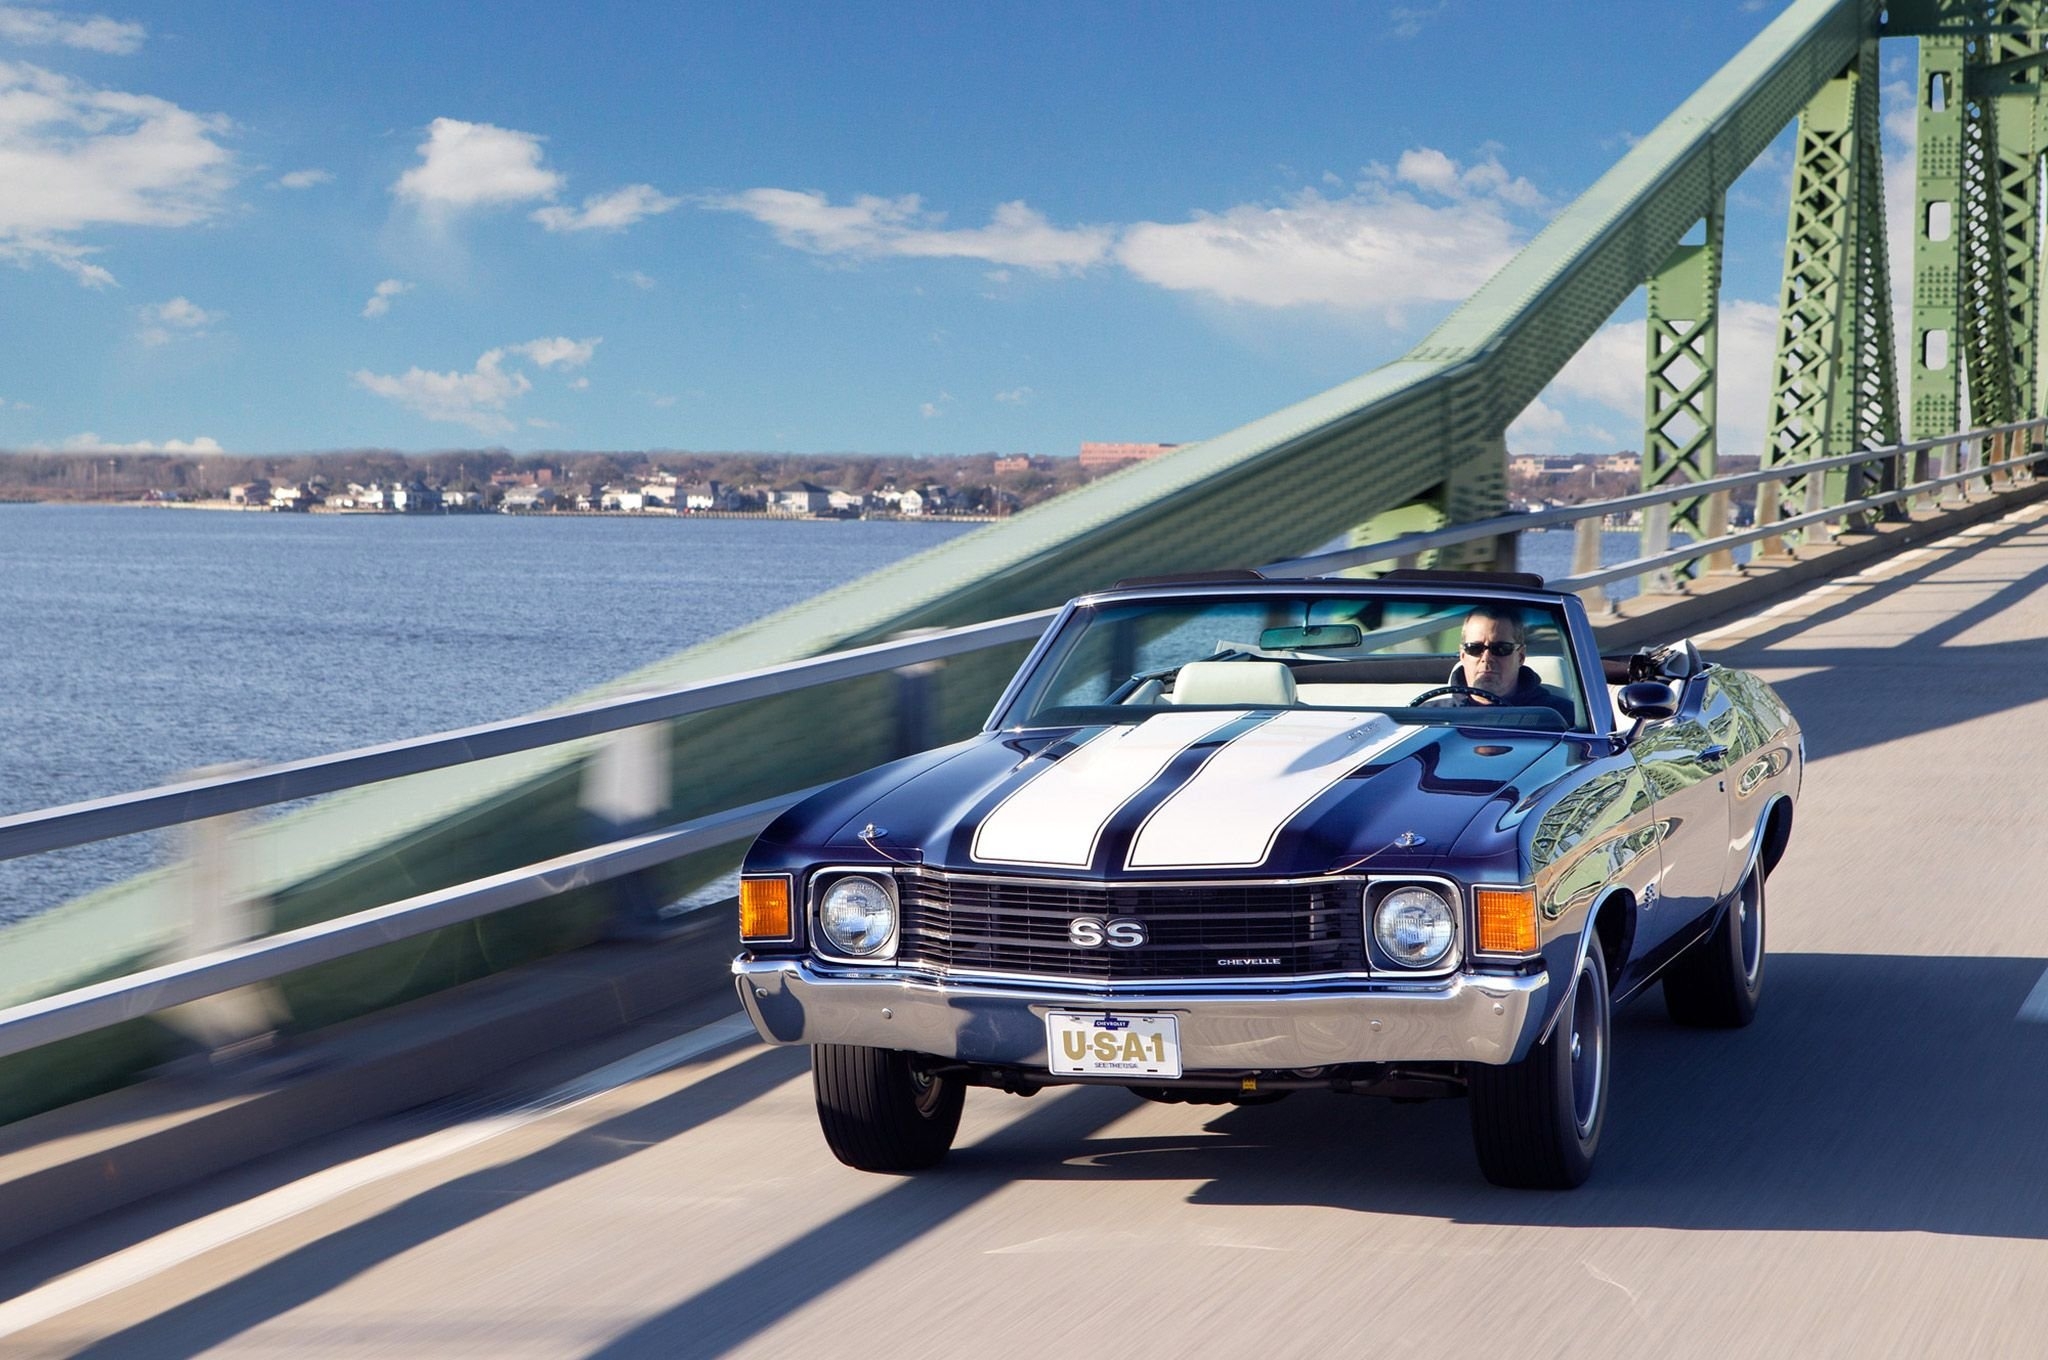 1967年雪佛兰Chevelle Ss驶过大桥